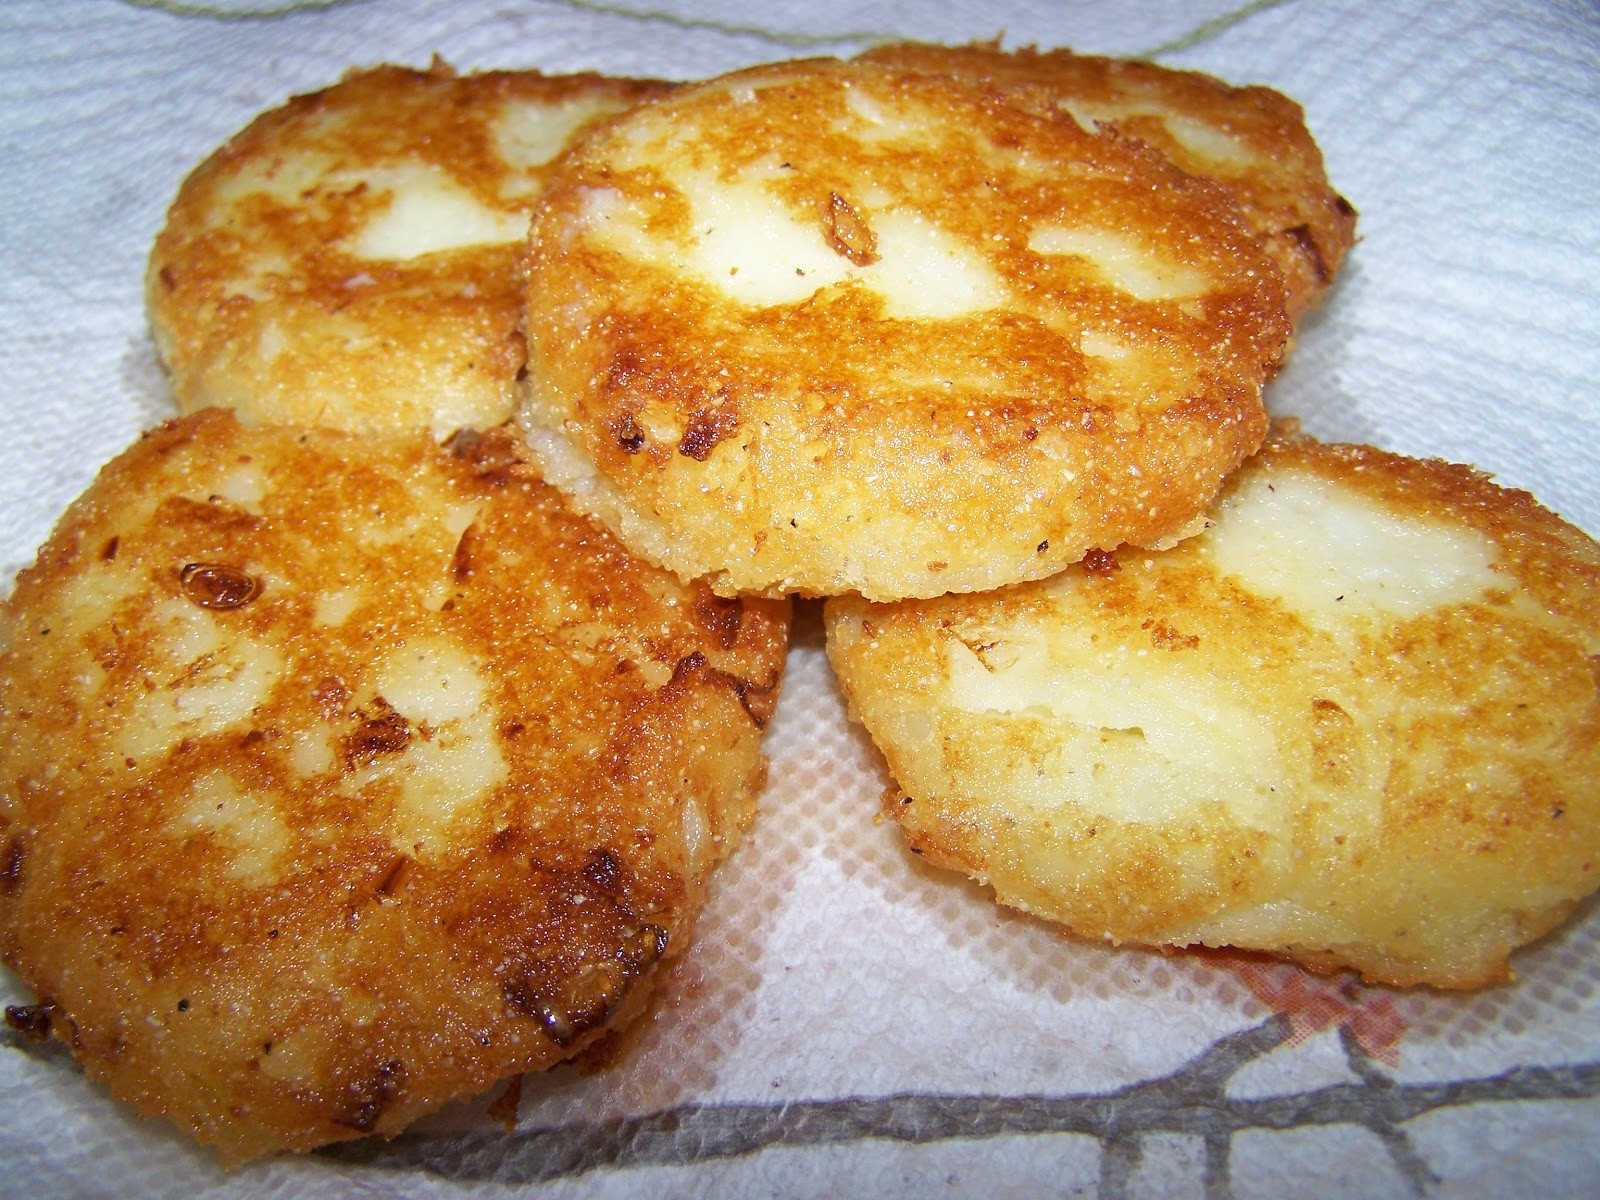 Fried Mashed Potato Cakes
 Man That Stuff Is Good Fried Potato Cakes Using Leftover